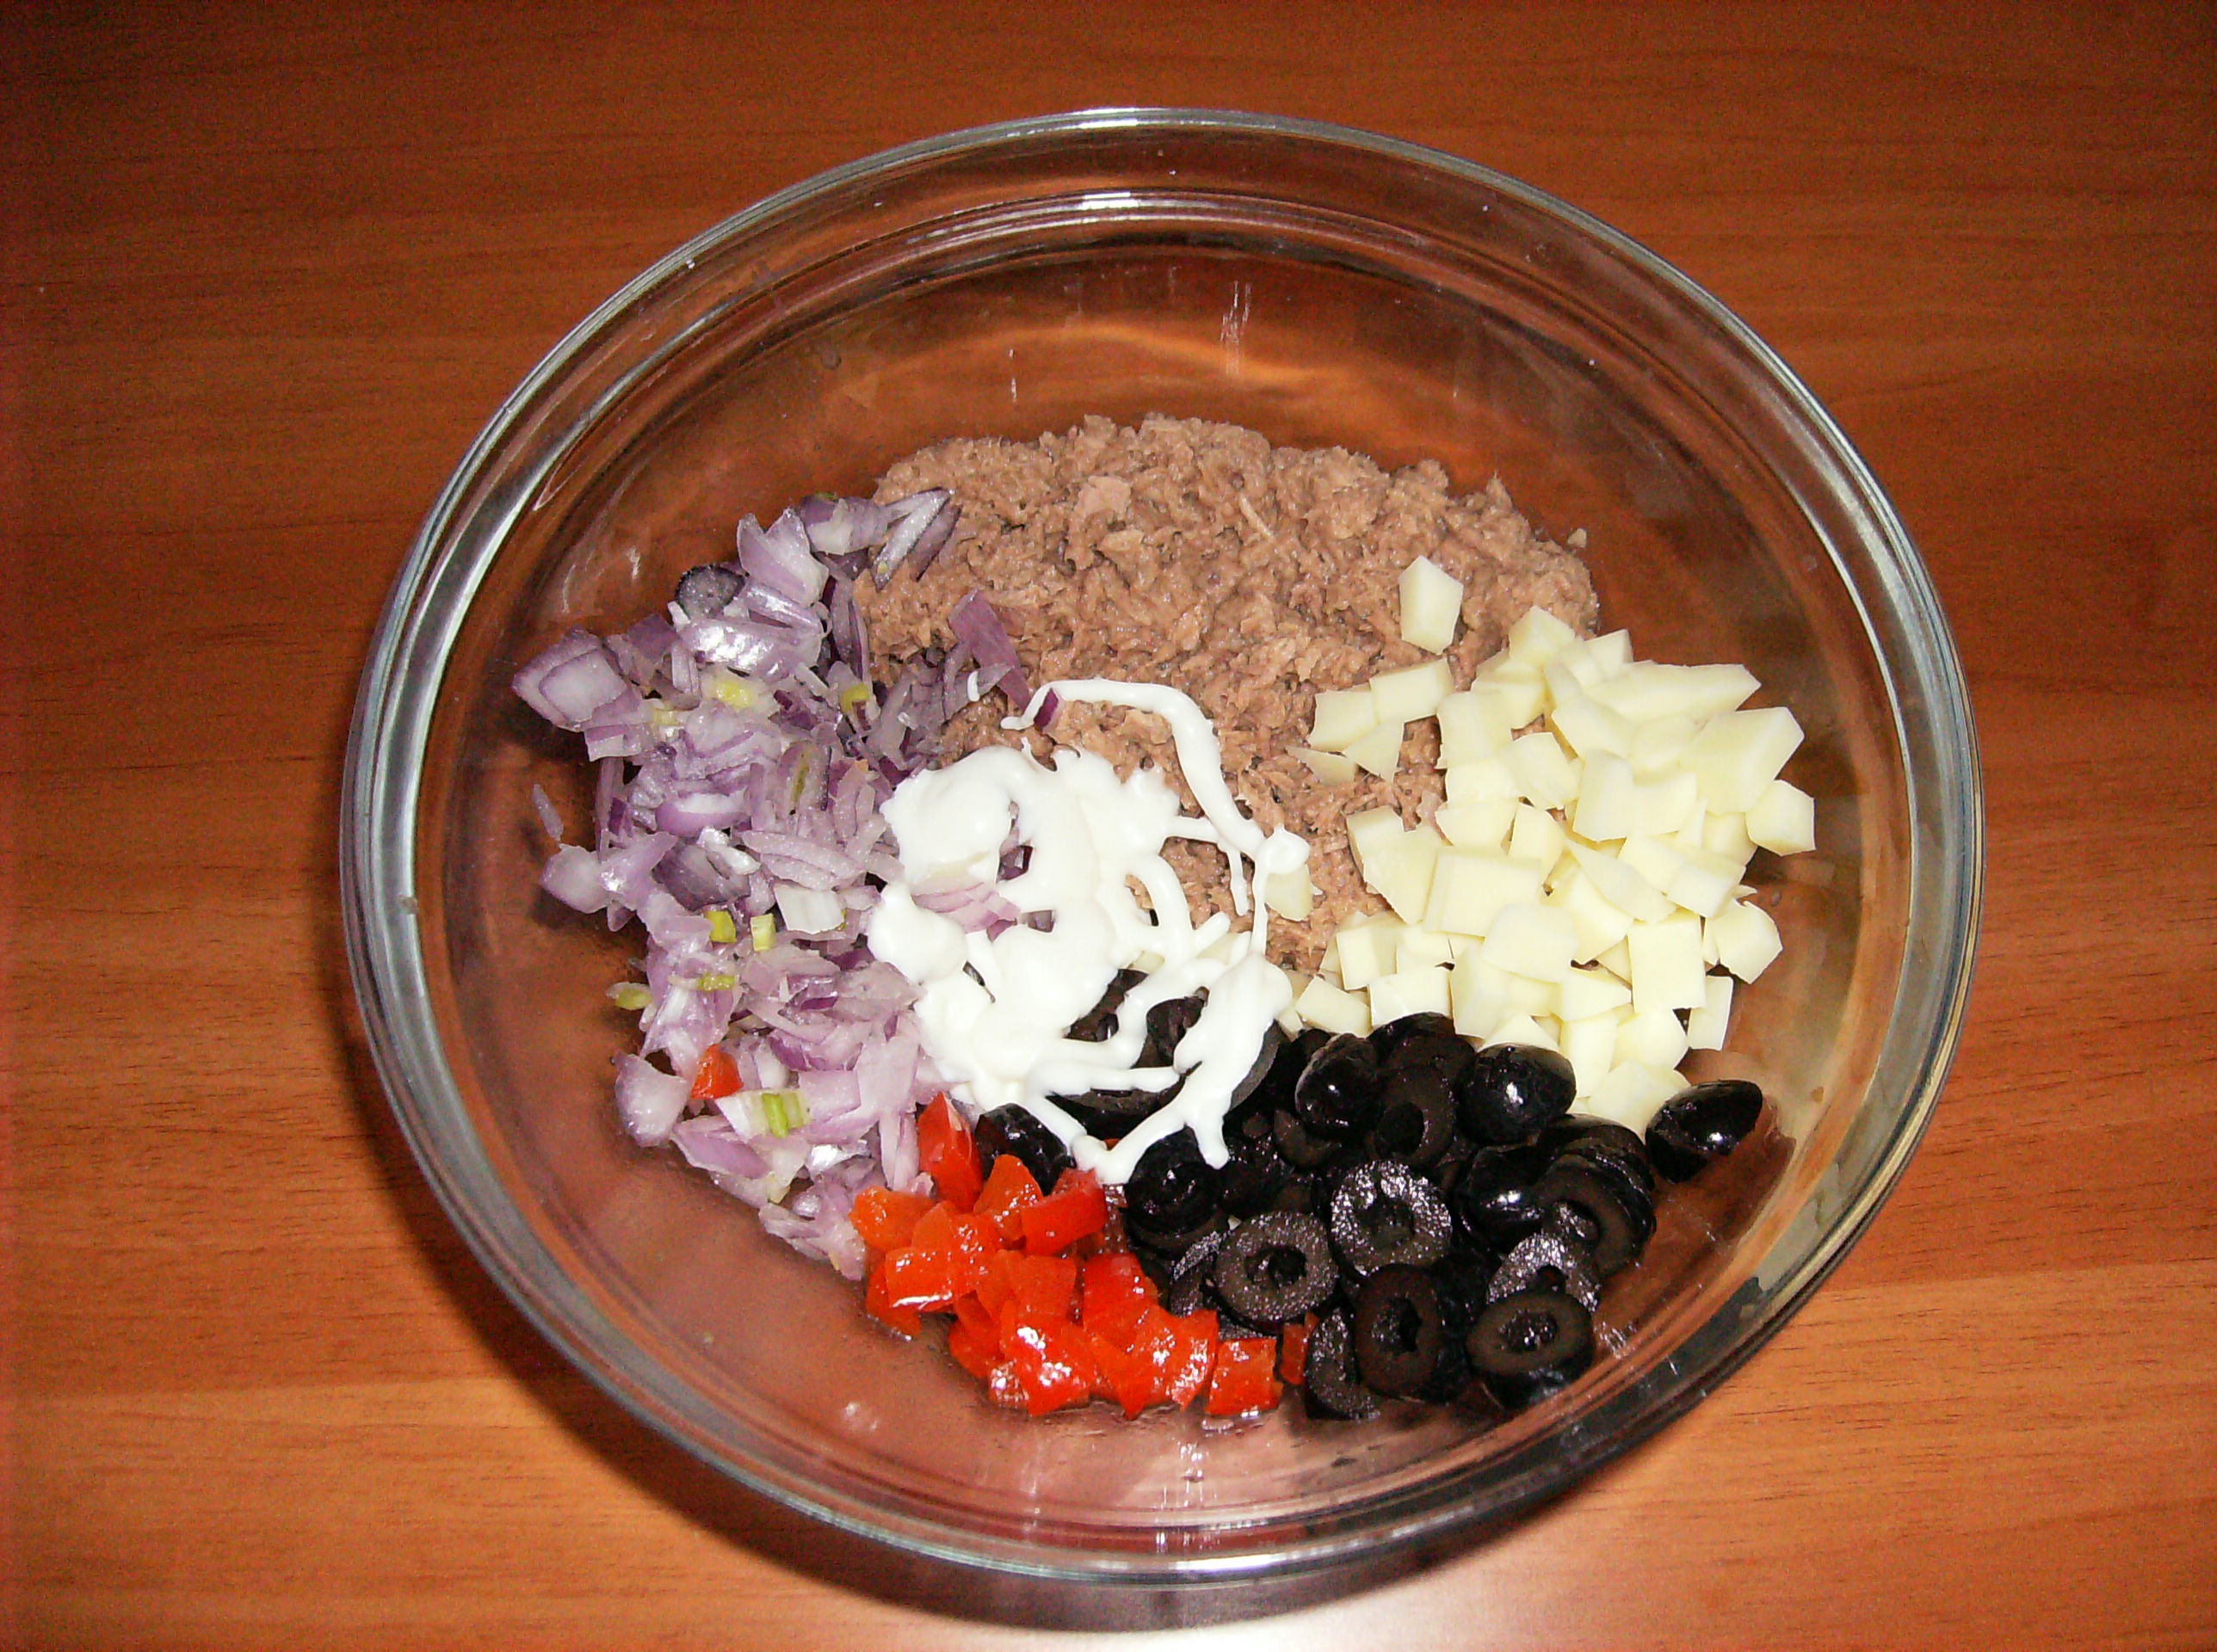 Salata de ton cu cascaval Delaco